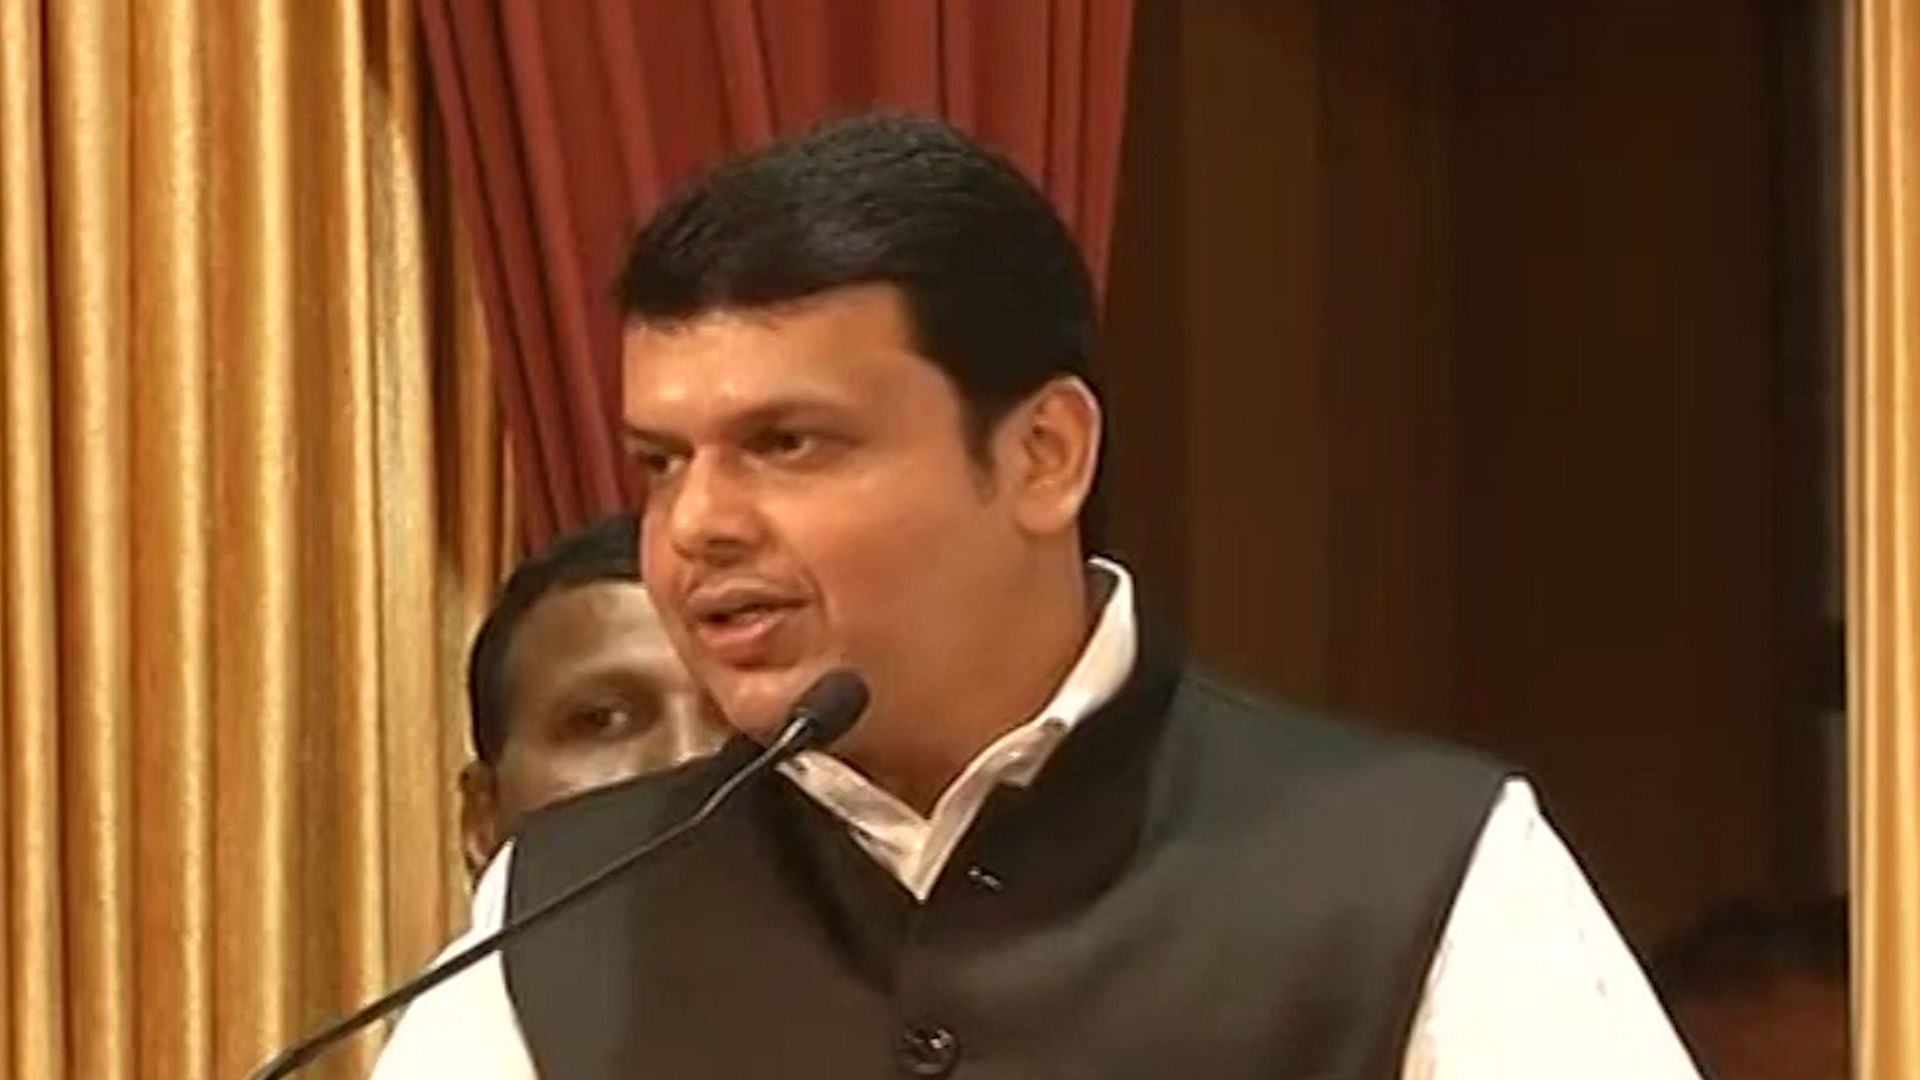 Maharashtra Chief Minister, Devendra Fadnavis. (Photo: ANI screengrab)